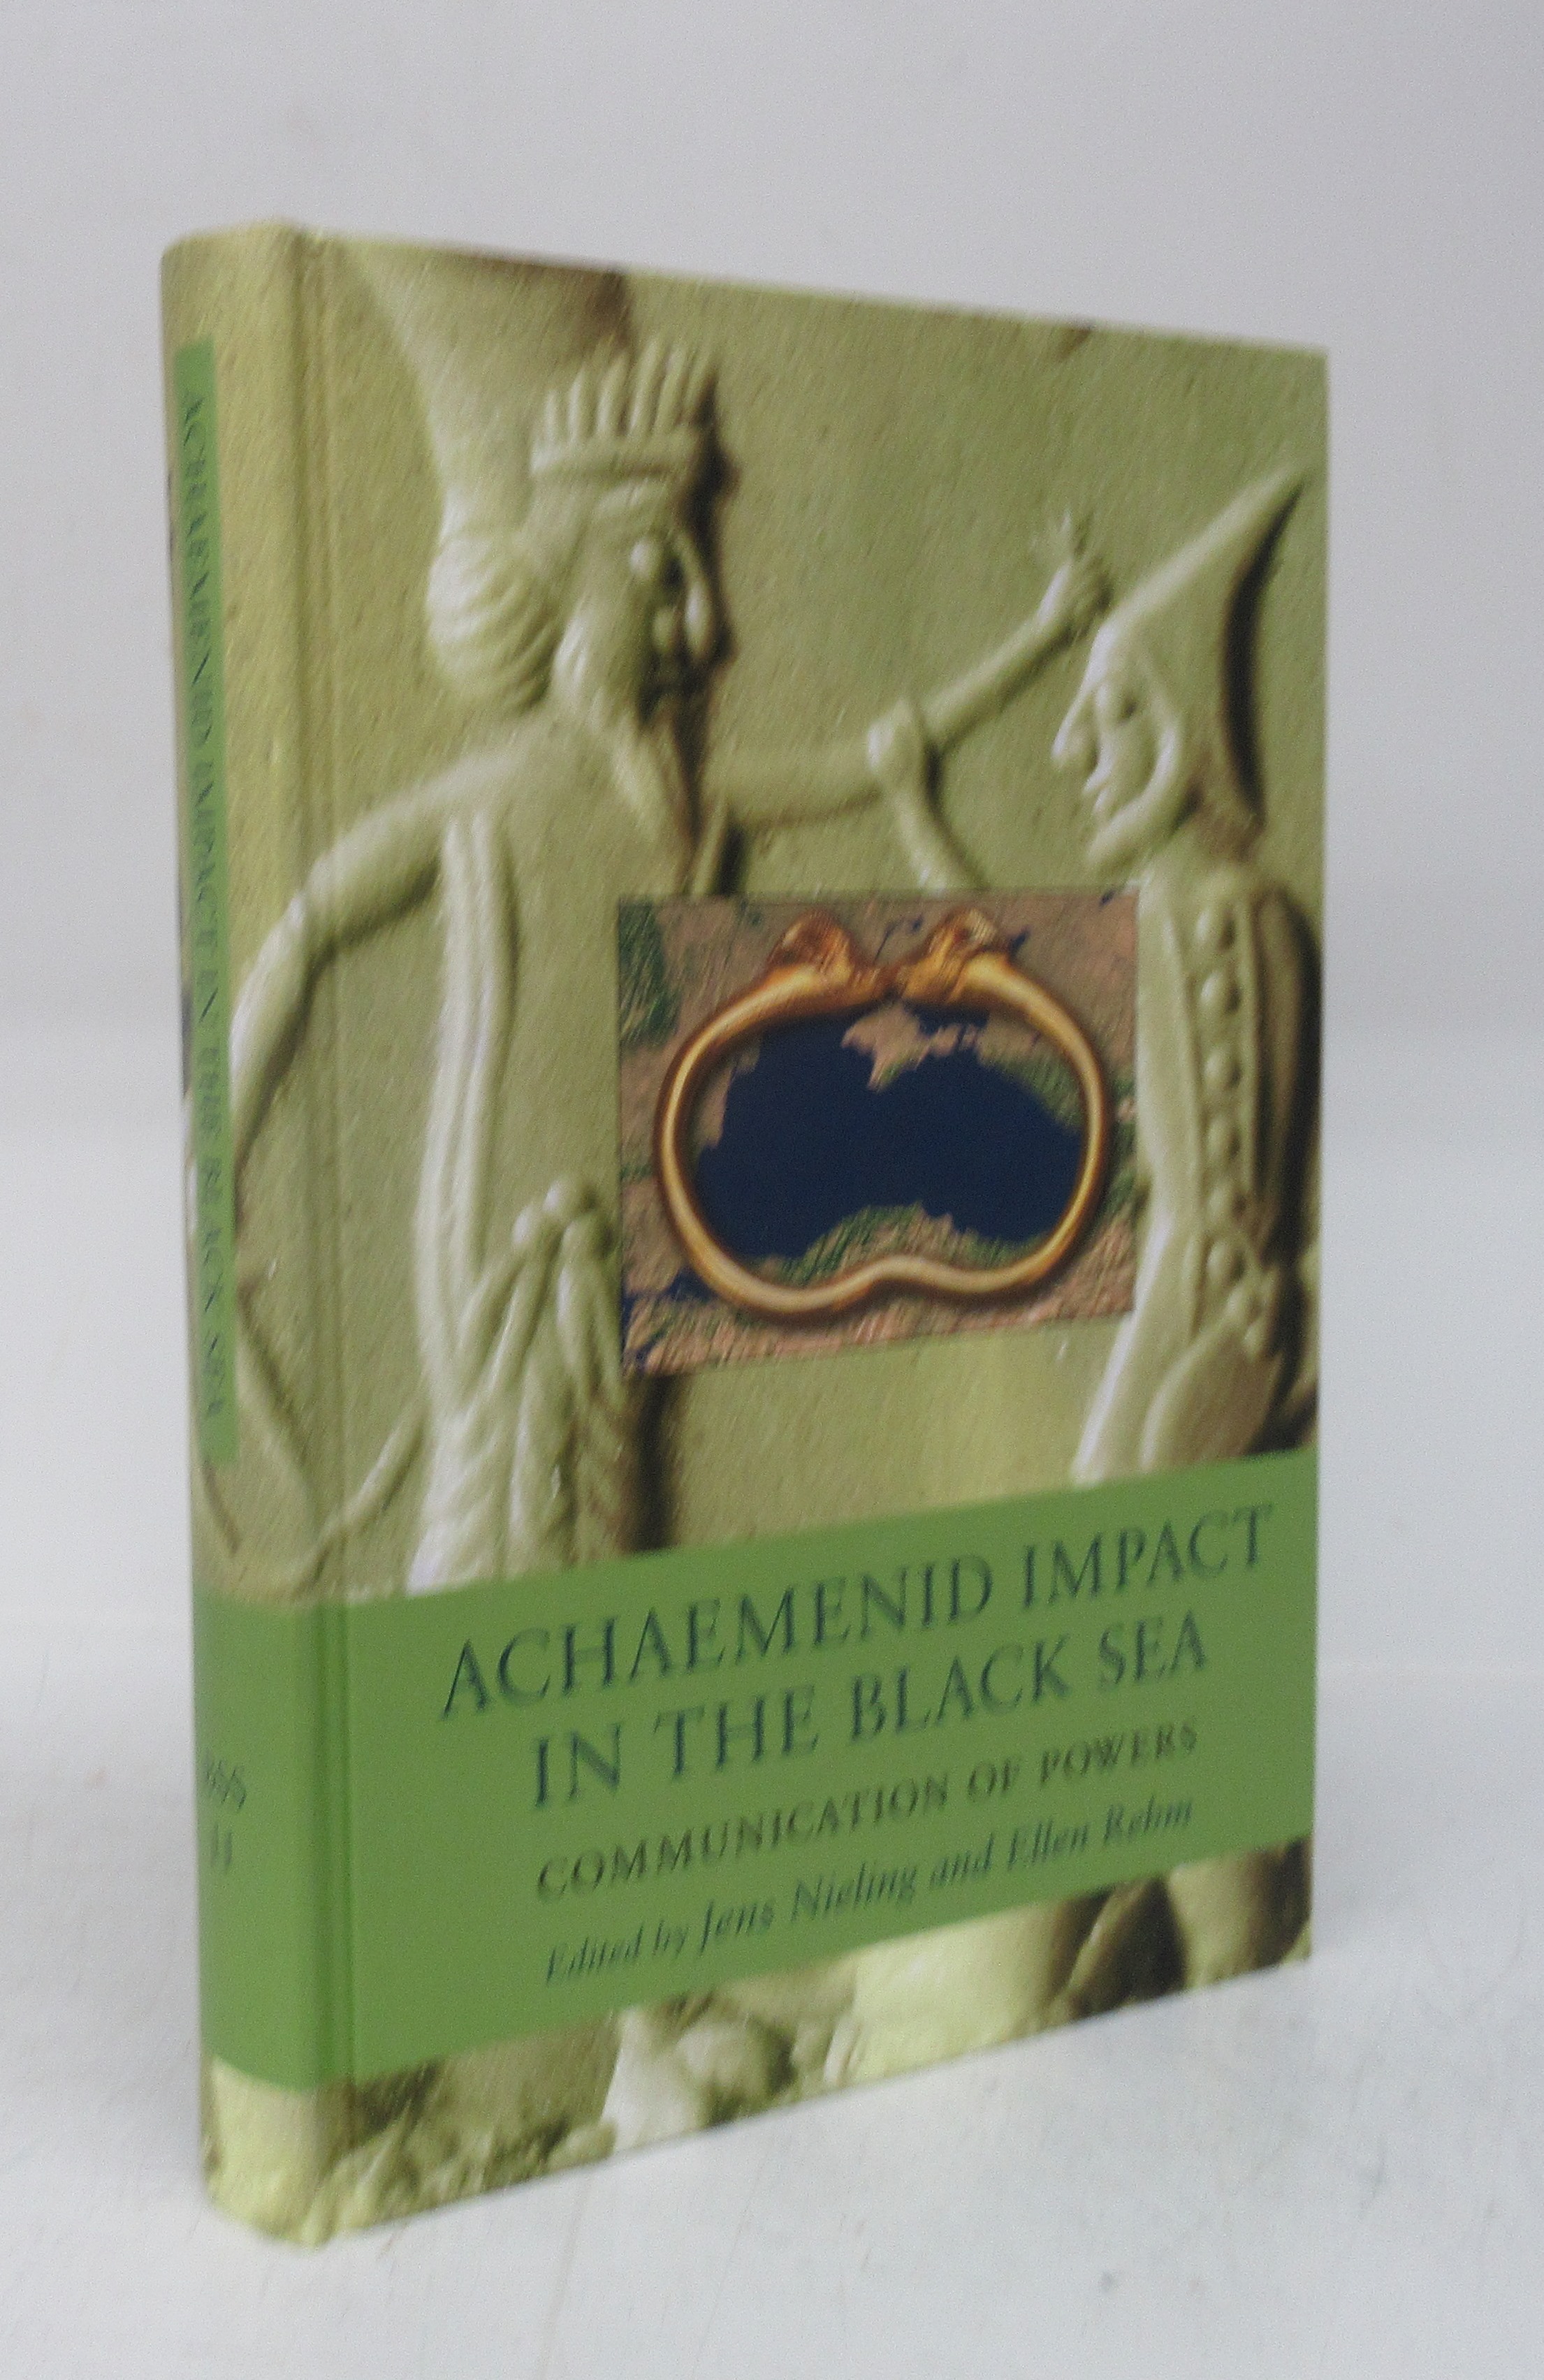 Achaemenid Impact in the Black Sea: Communication of Powers - NIELING, Jens; REHM, Ellen (eds.)